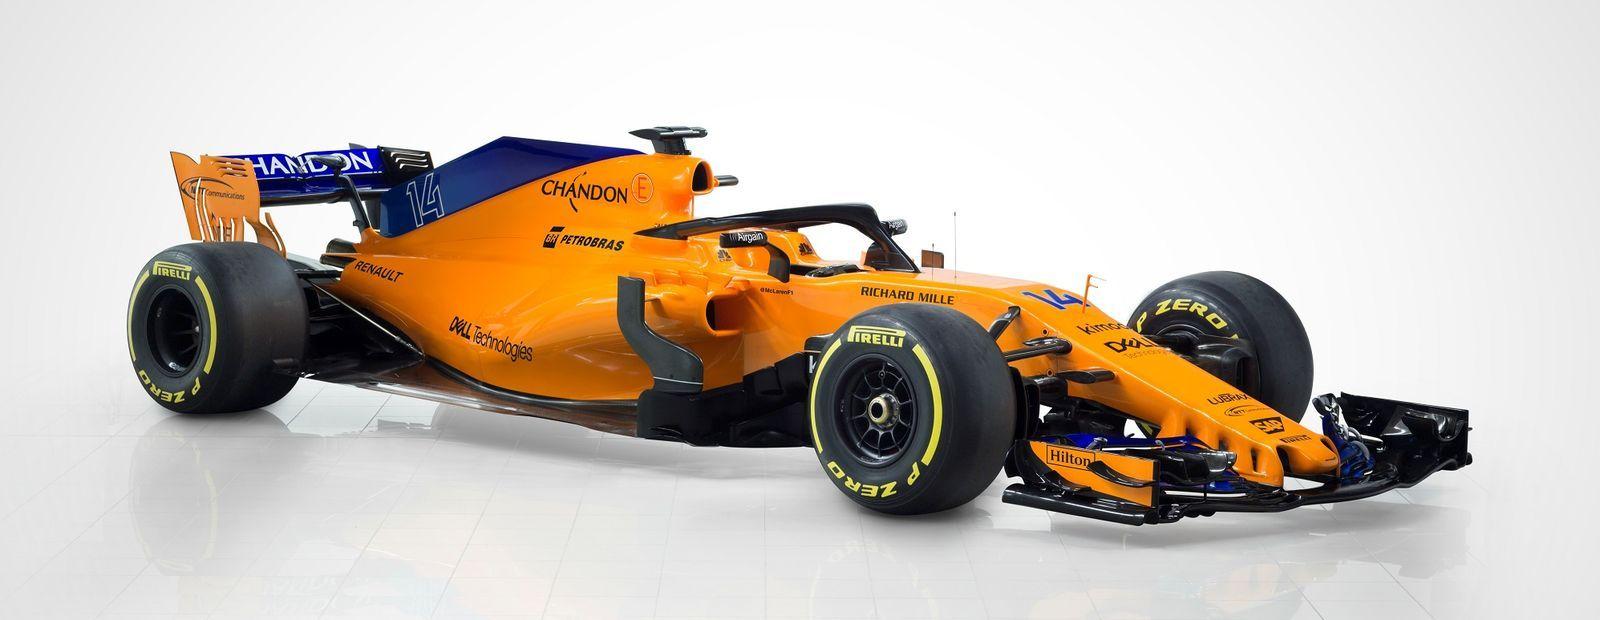 McLaren F1 2018 Logo - McLaren Formula 1 - McLaren unveils striking 2018 challenger: the MCL33